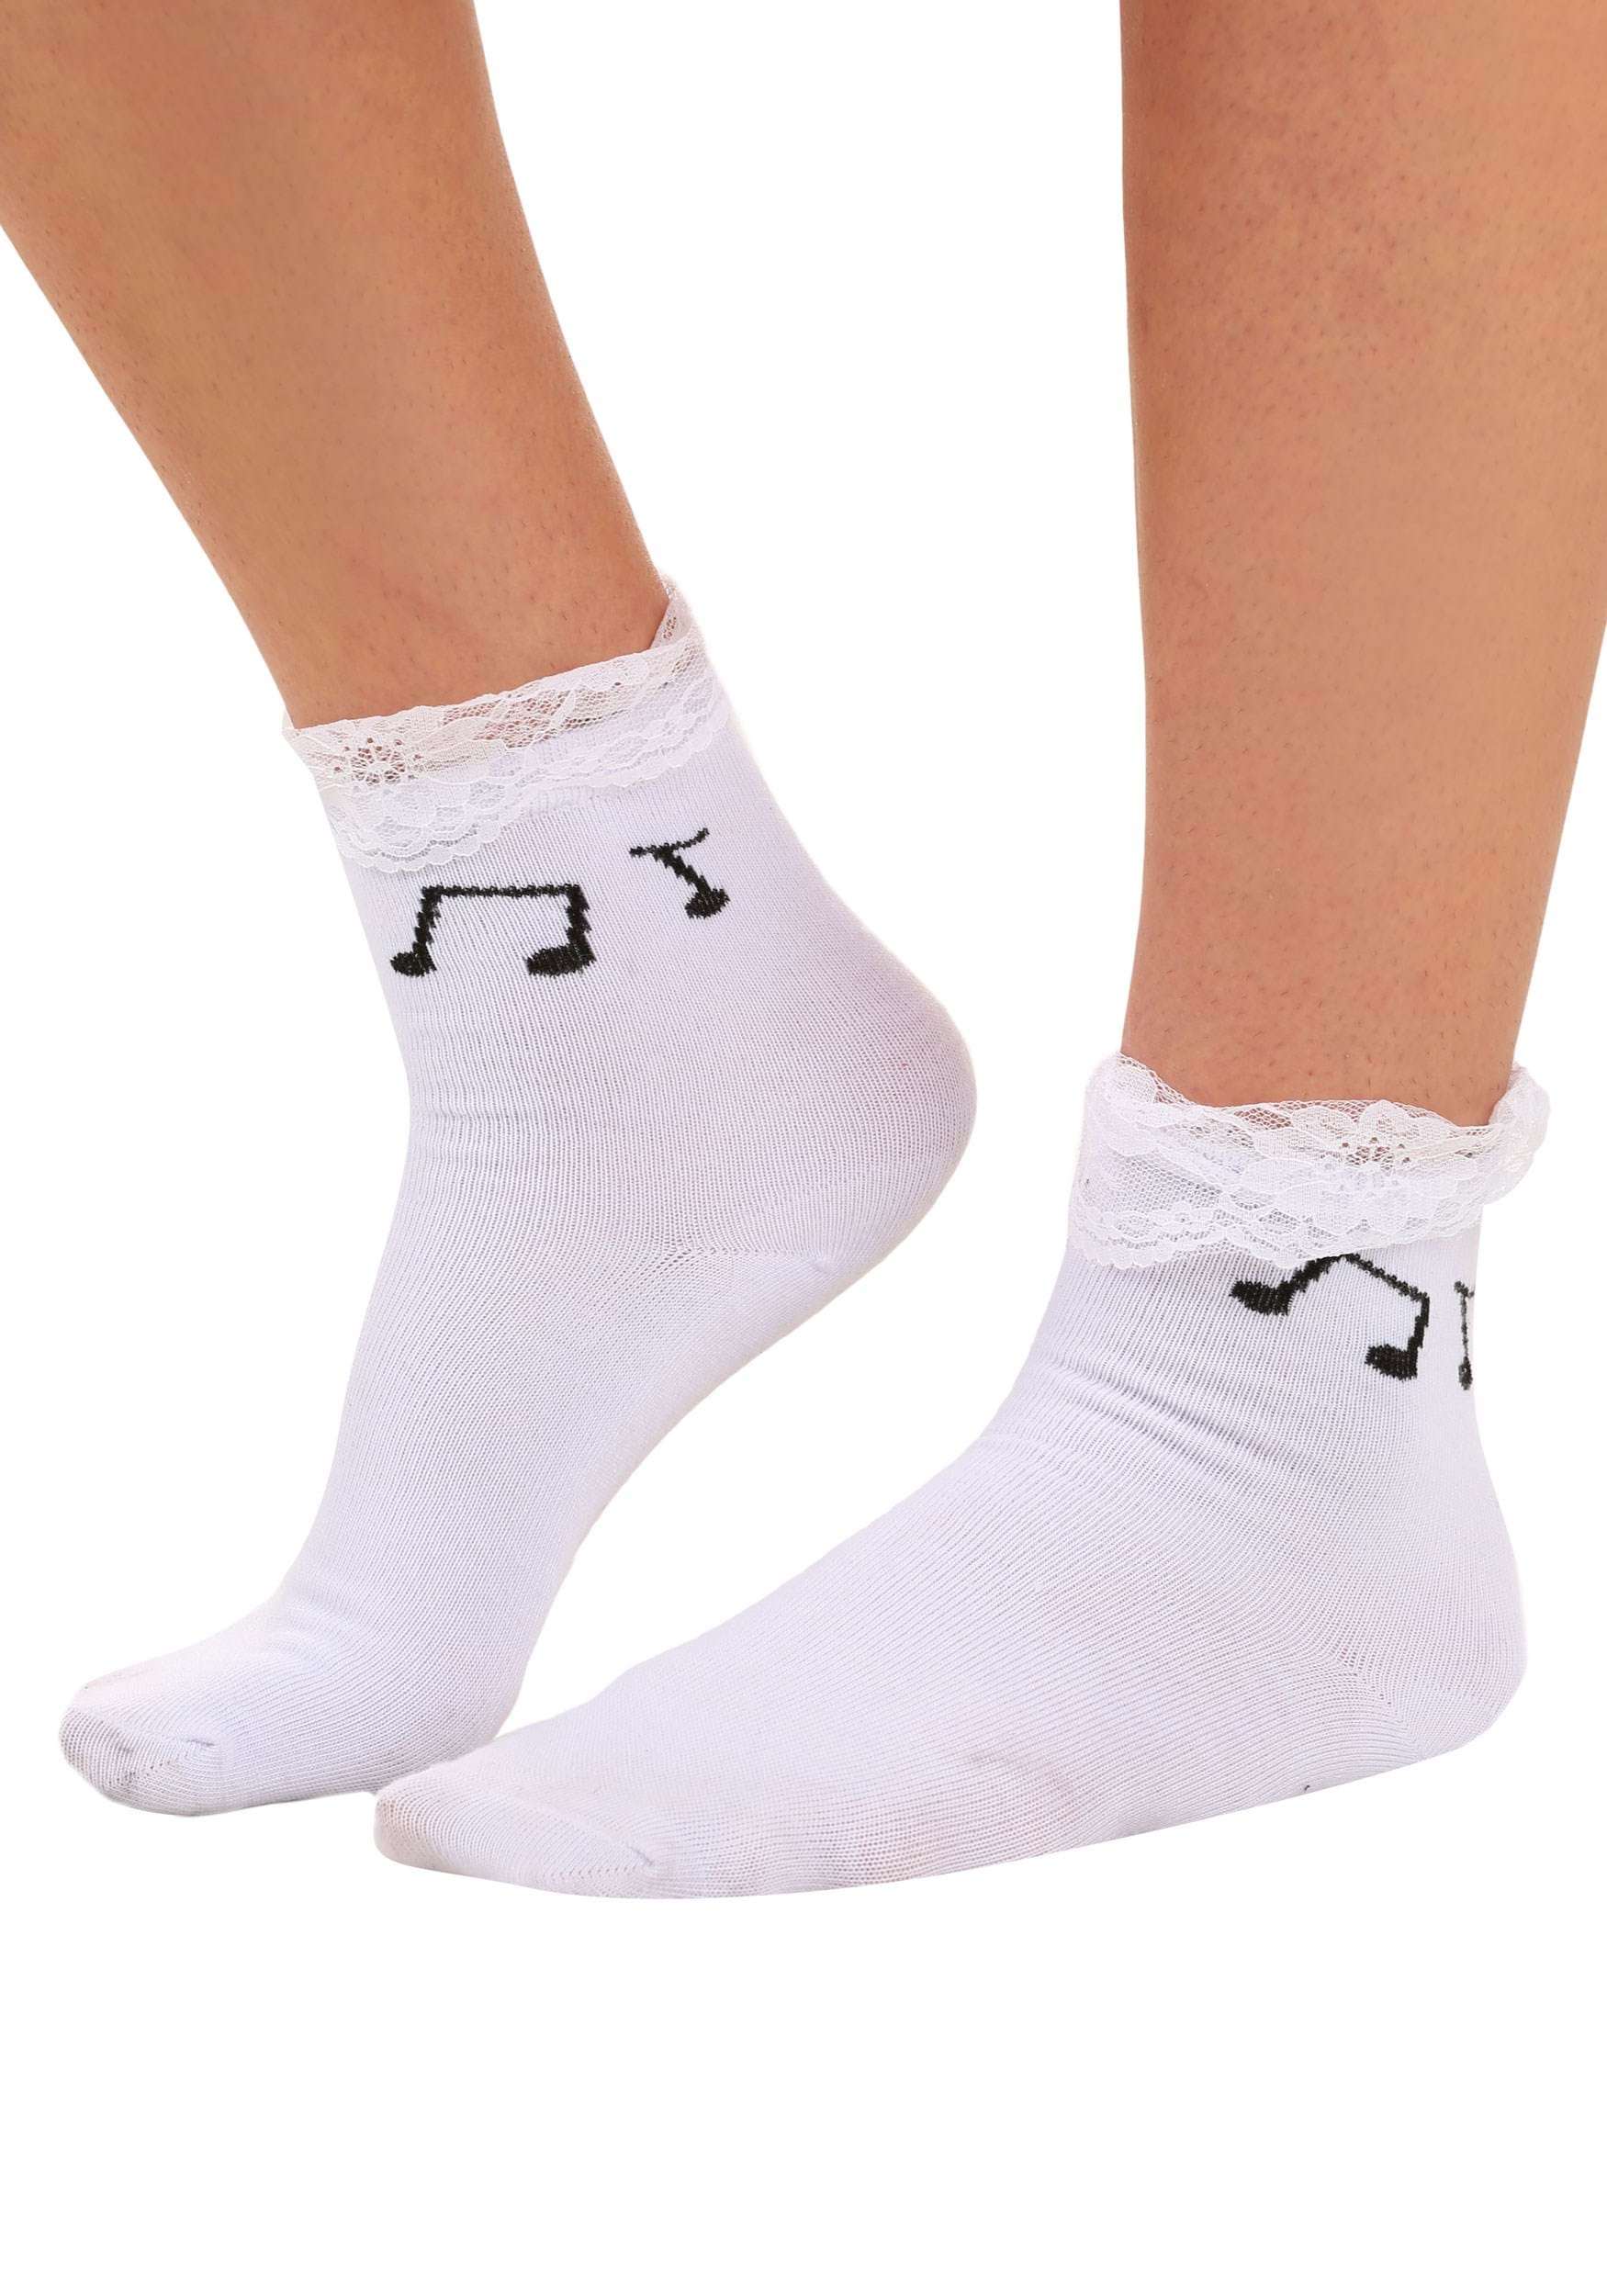 Plus Size Sock Hop Women's Kit